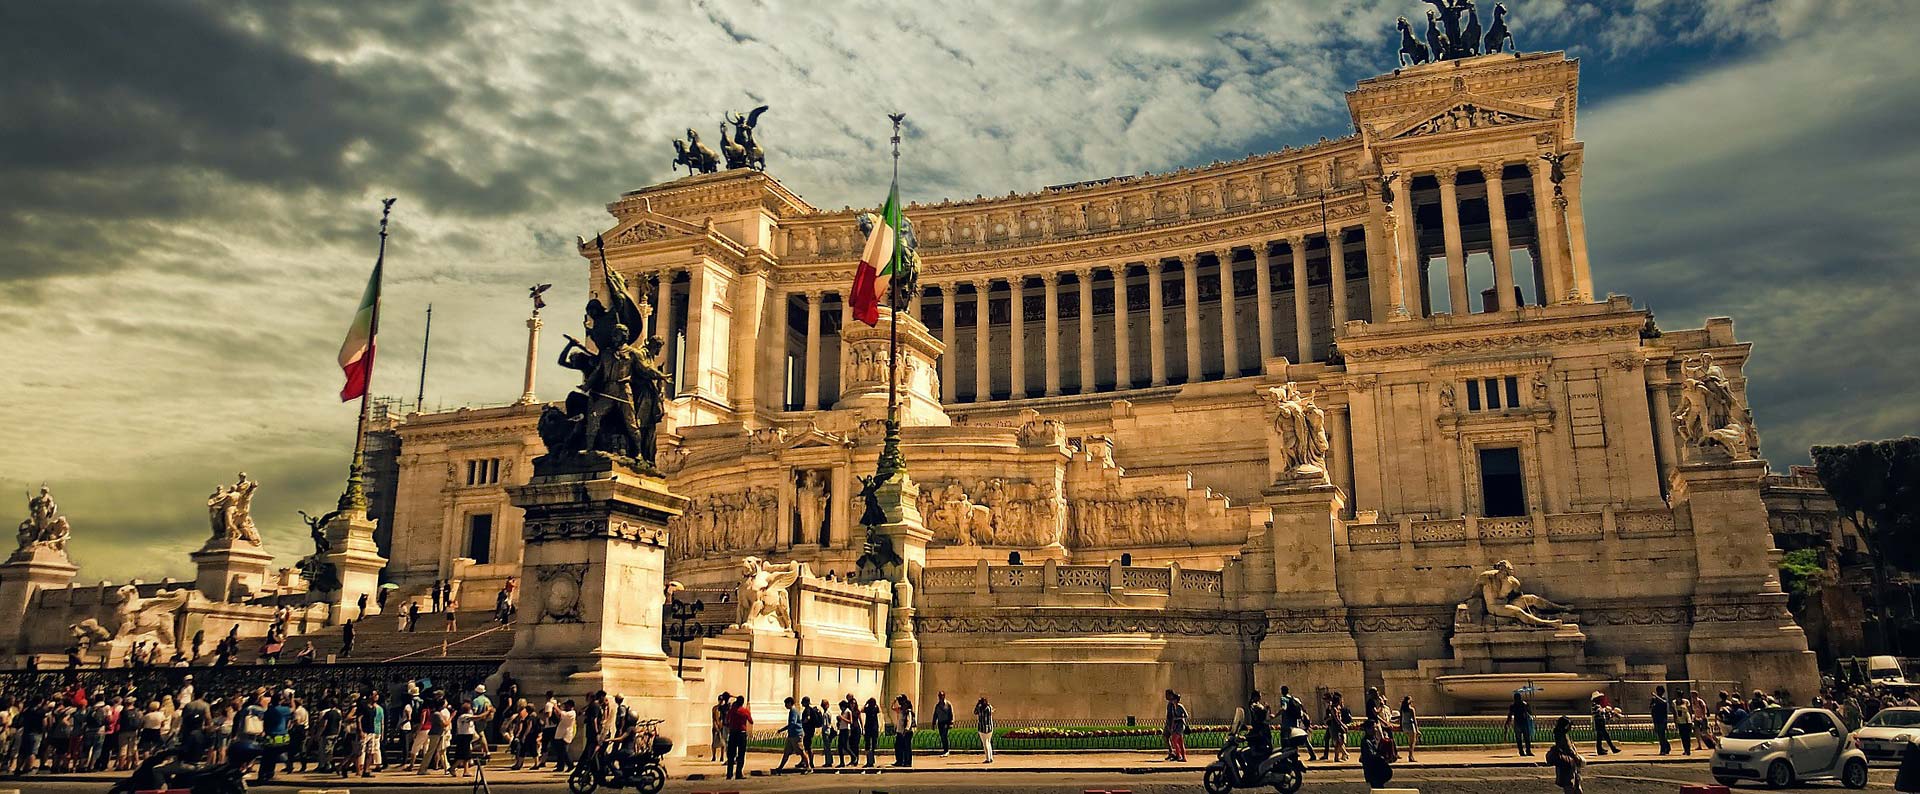 Discounted flight tickets from Hong Kong to Rome - IFlyFirstClass